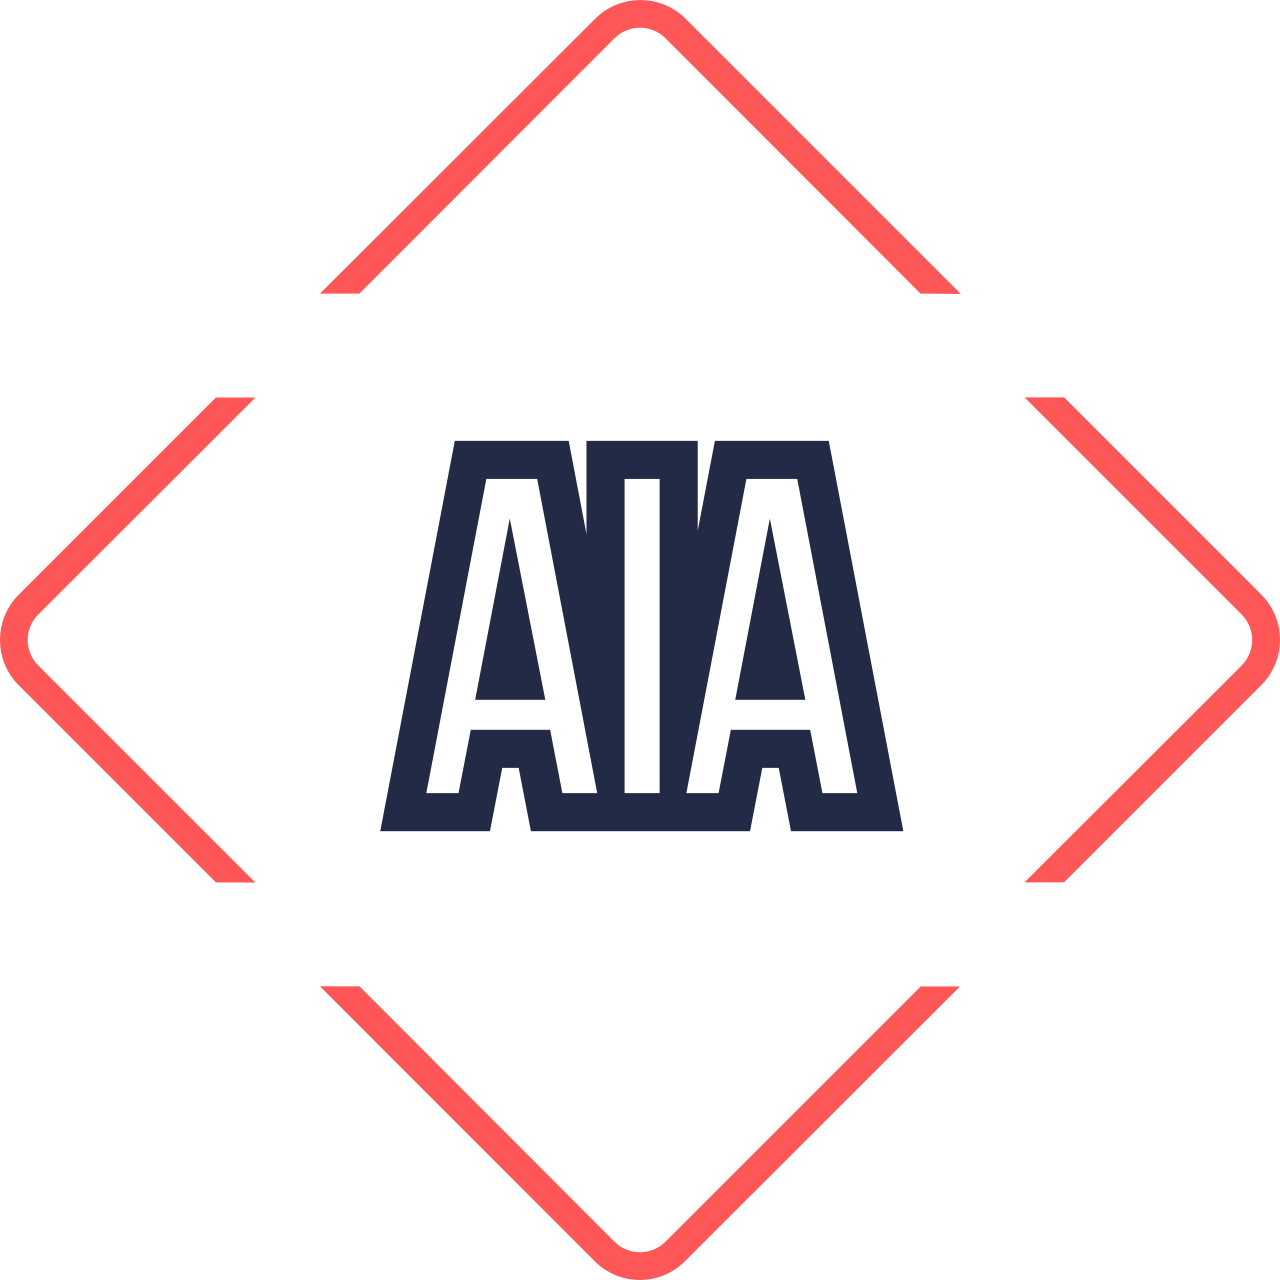 AIA's logo